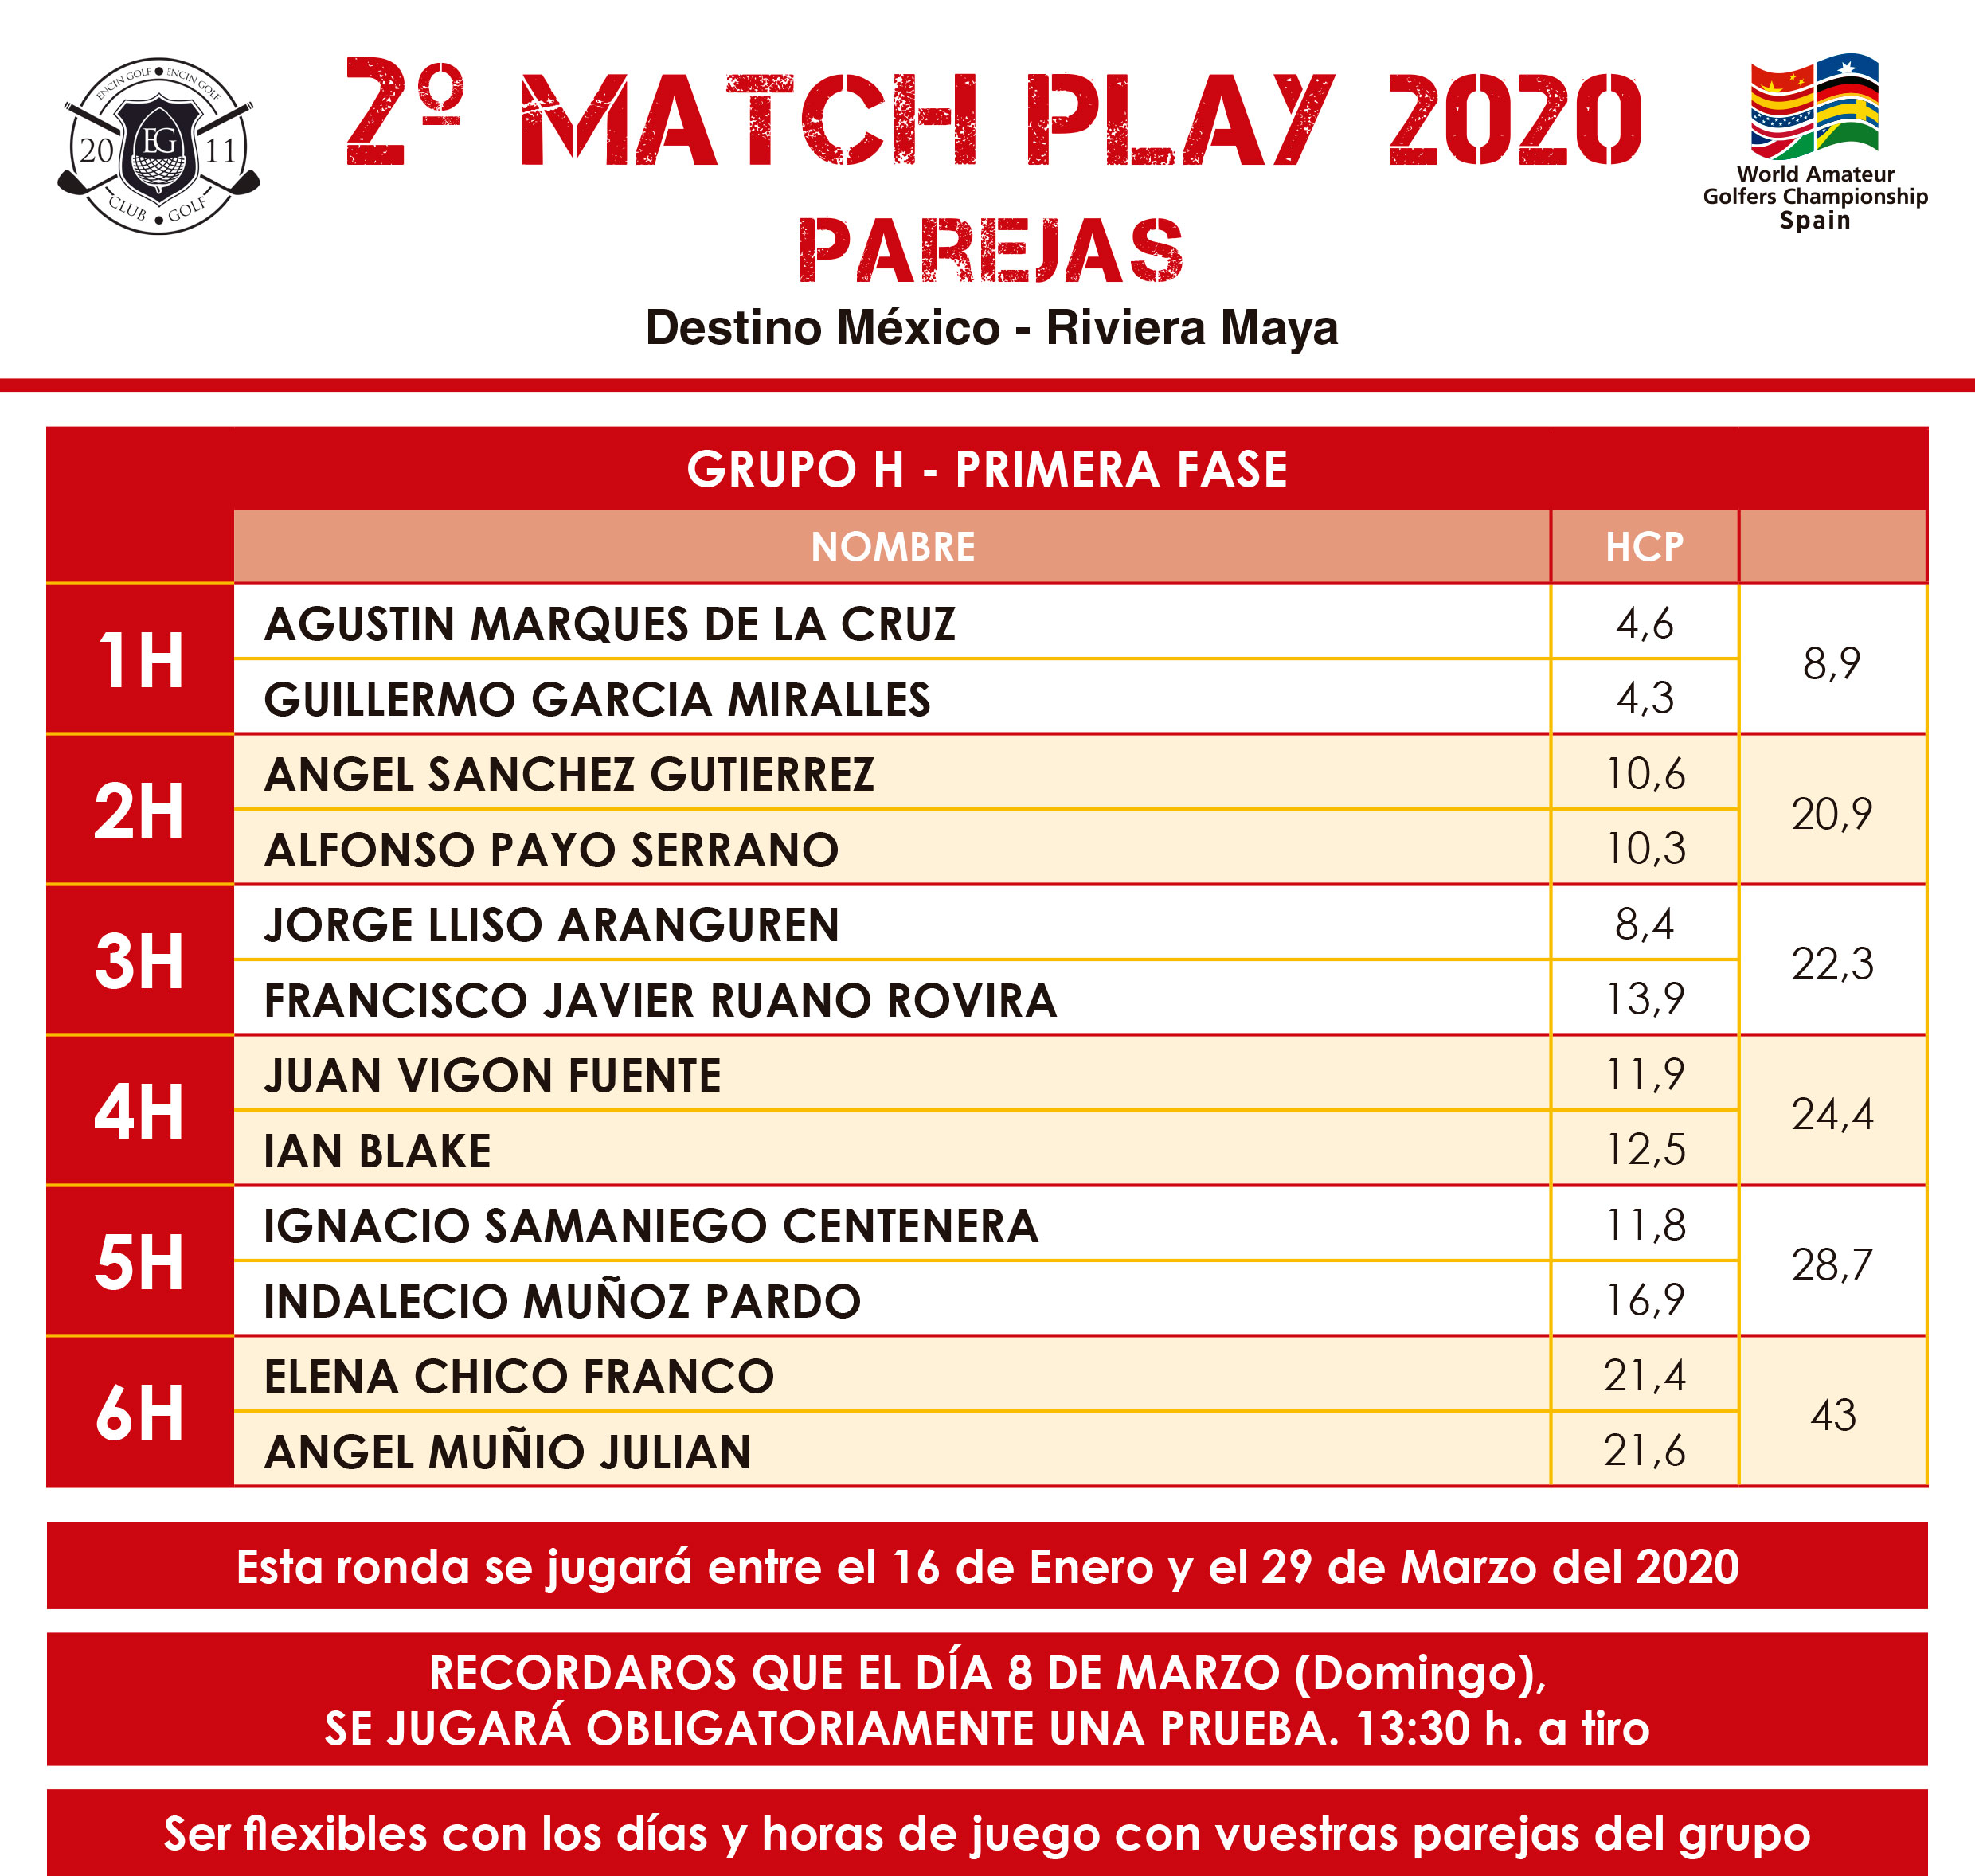 WAGC SPAIN - MATCH PLAY 2020 PAREJAS - 1ª FASE - GRUPO H